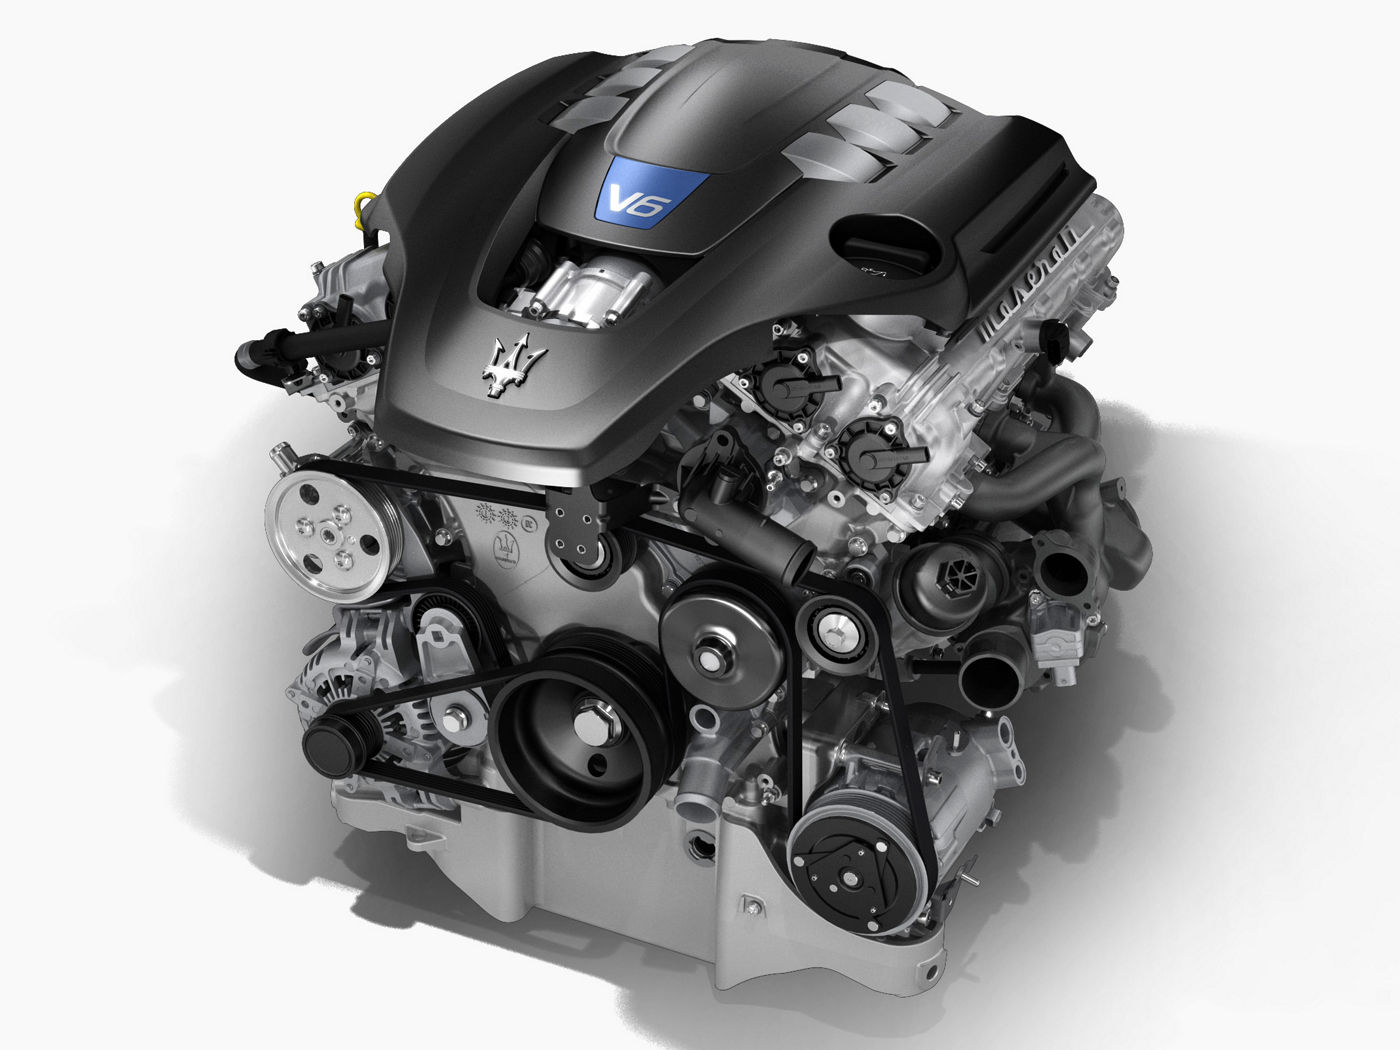 The all Italian Maserati Quattroporte V6 Engine: horsepower, cc and structure